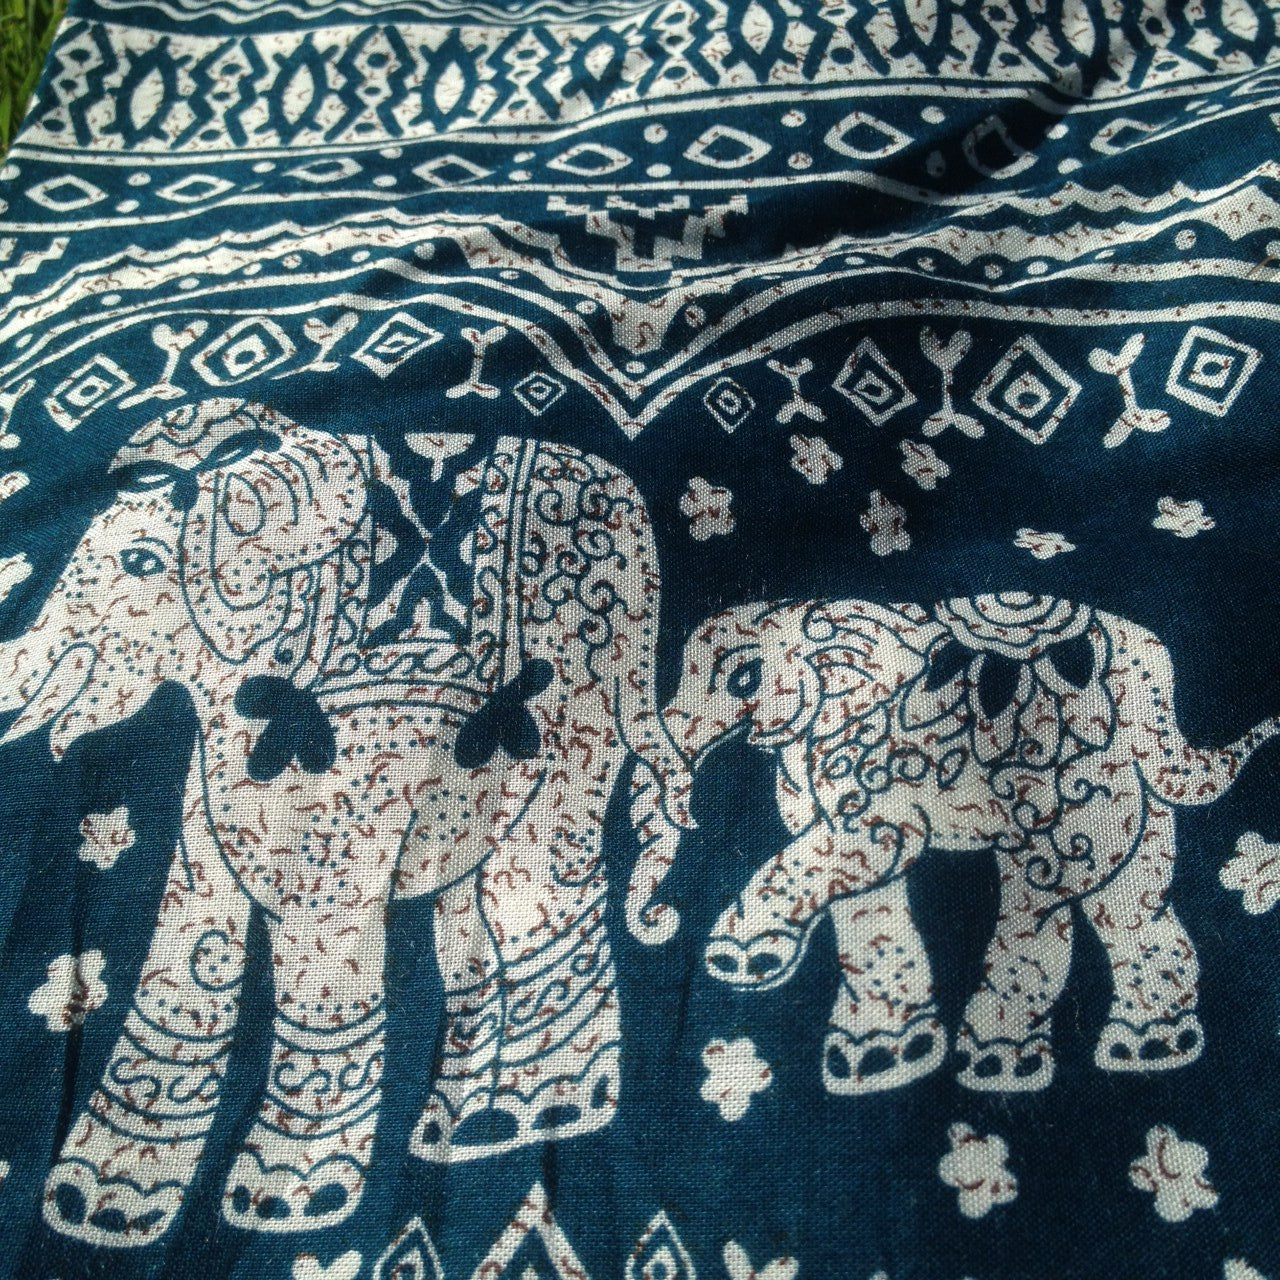 arahant elephant harem pants bohemian island